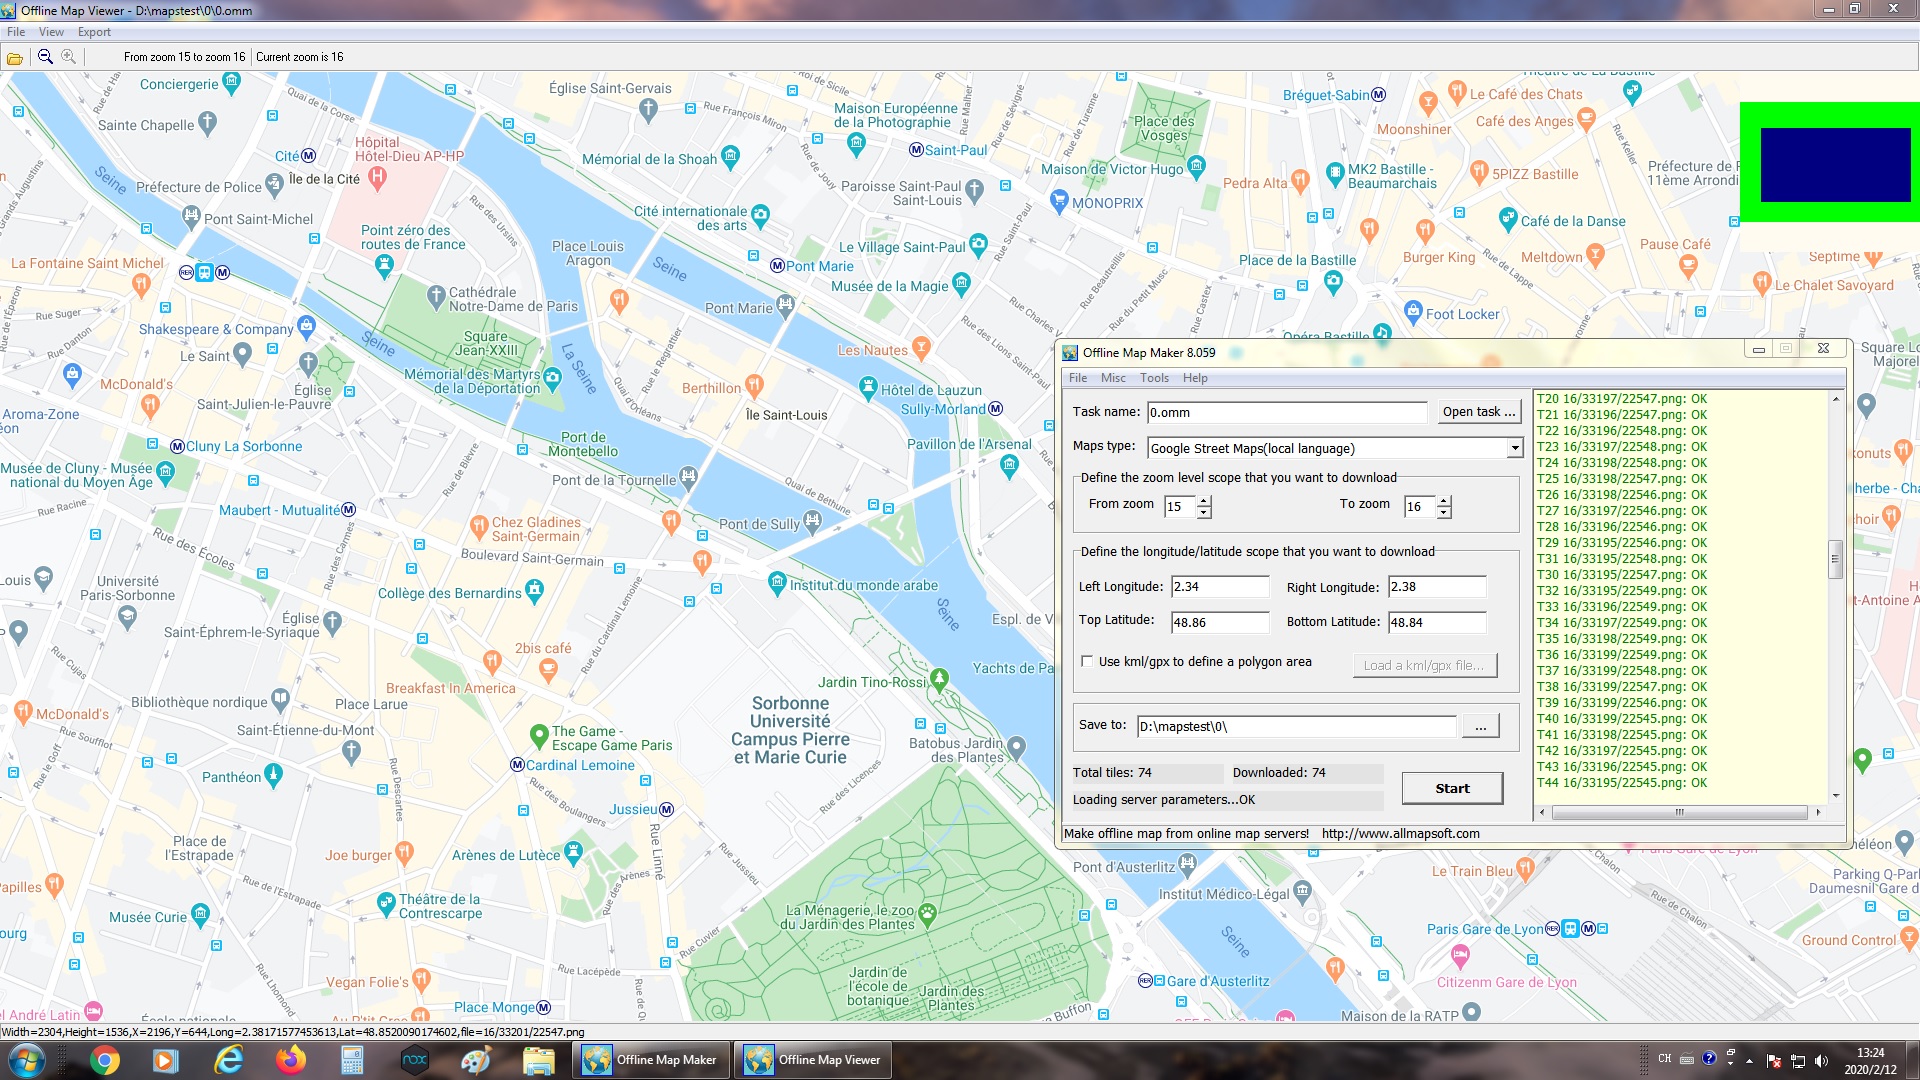 for android download AllMapSoft Offline Map Maker 8.278